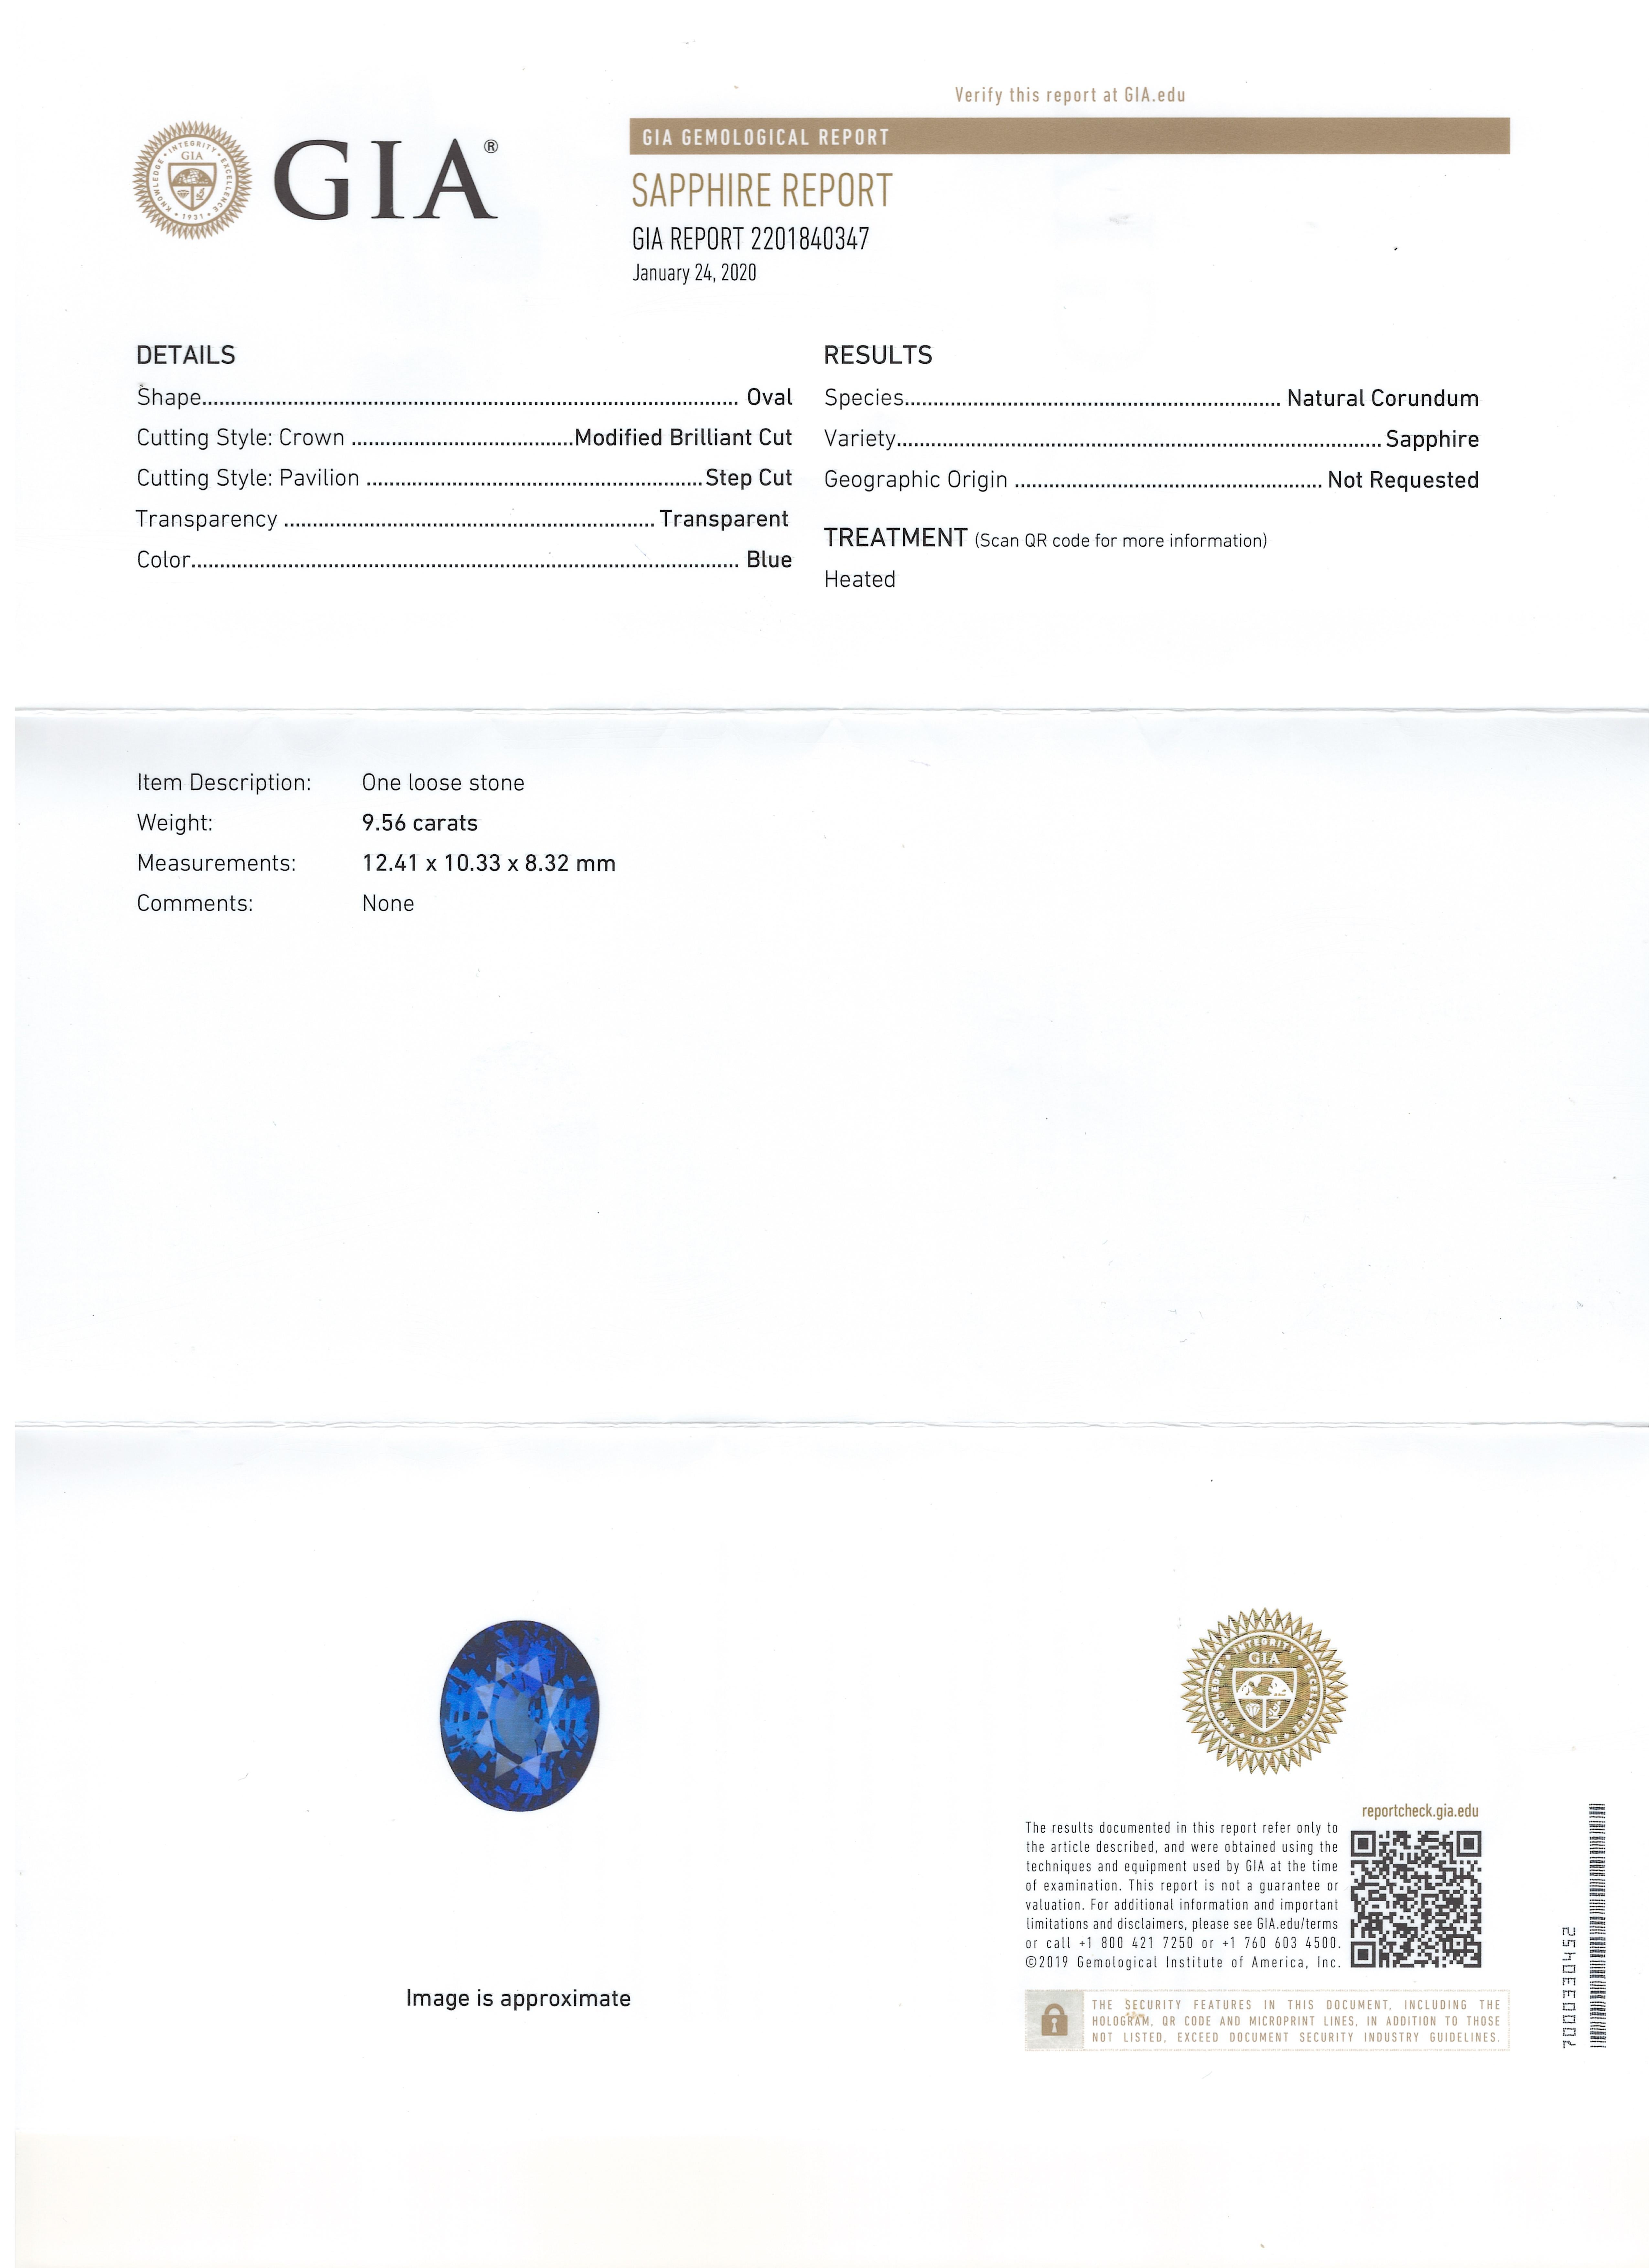 Women's or Men's Platinum Ring with 9.56 Carat, Royal Blue Ceylon Sapphire For Sale